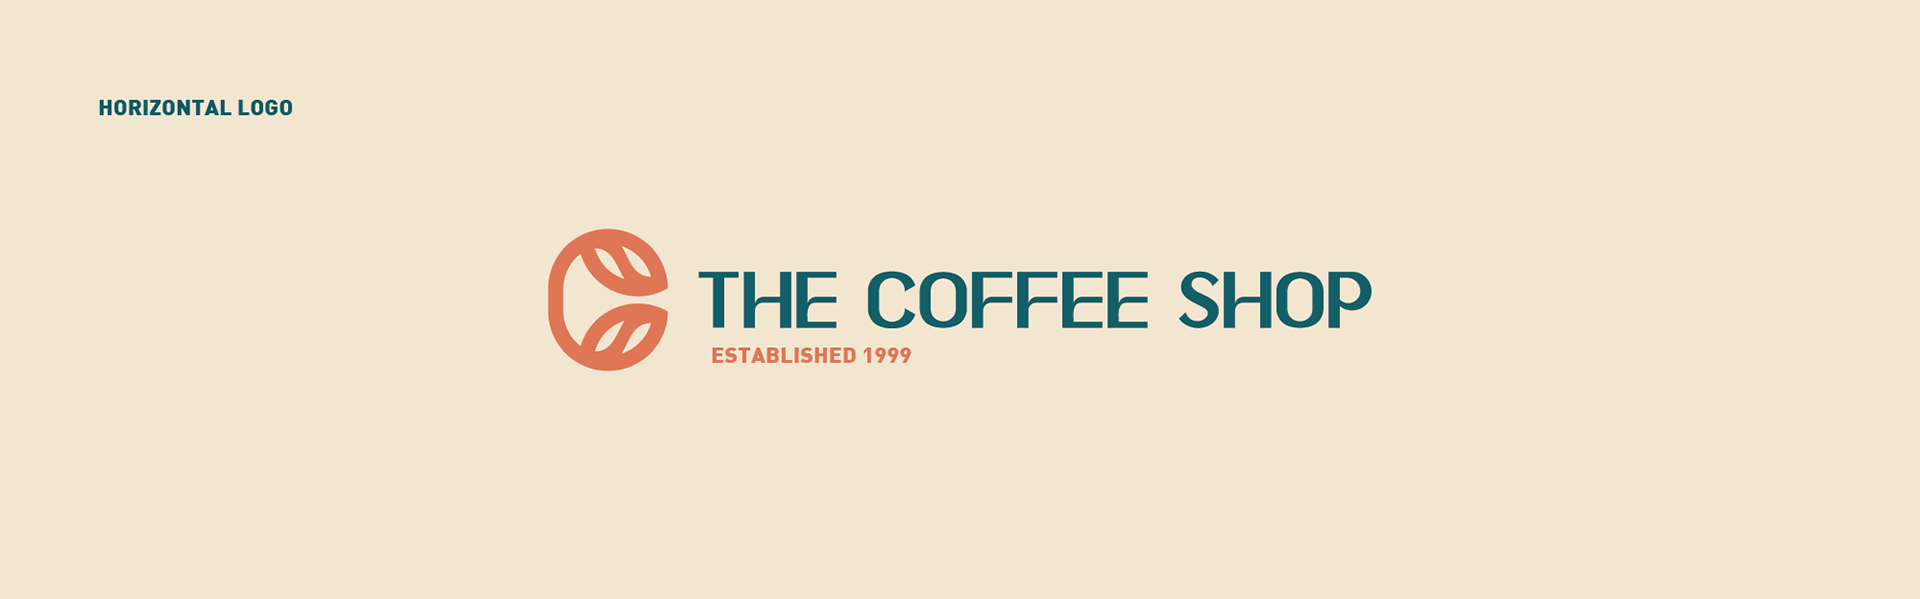 the-coffee-shop_horizontal-logo